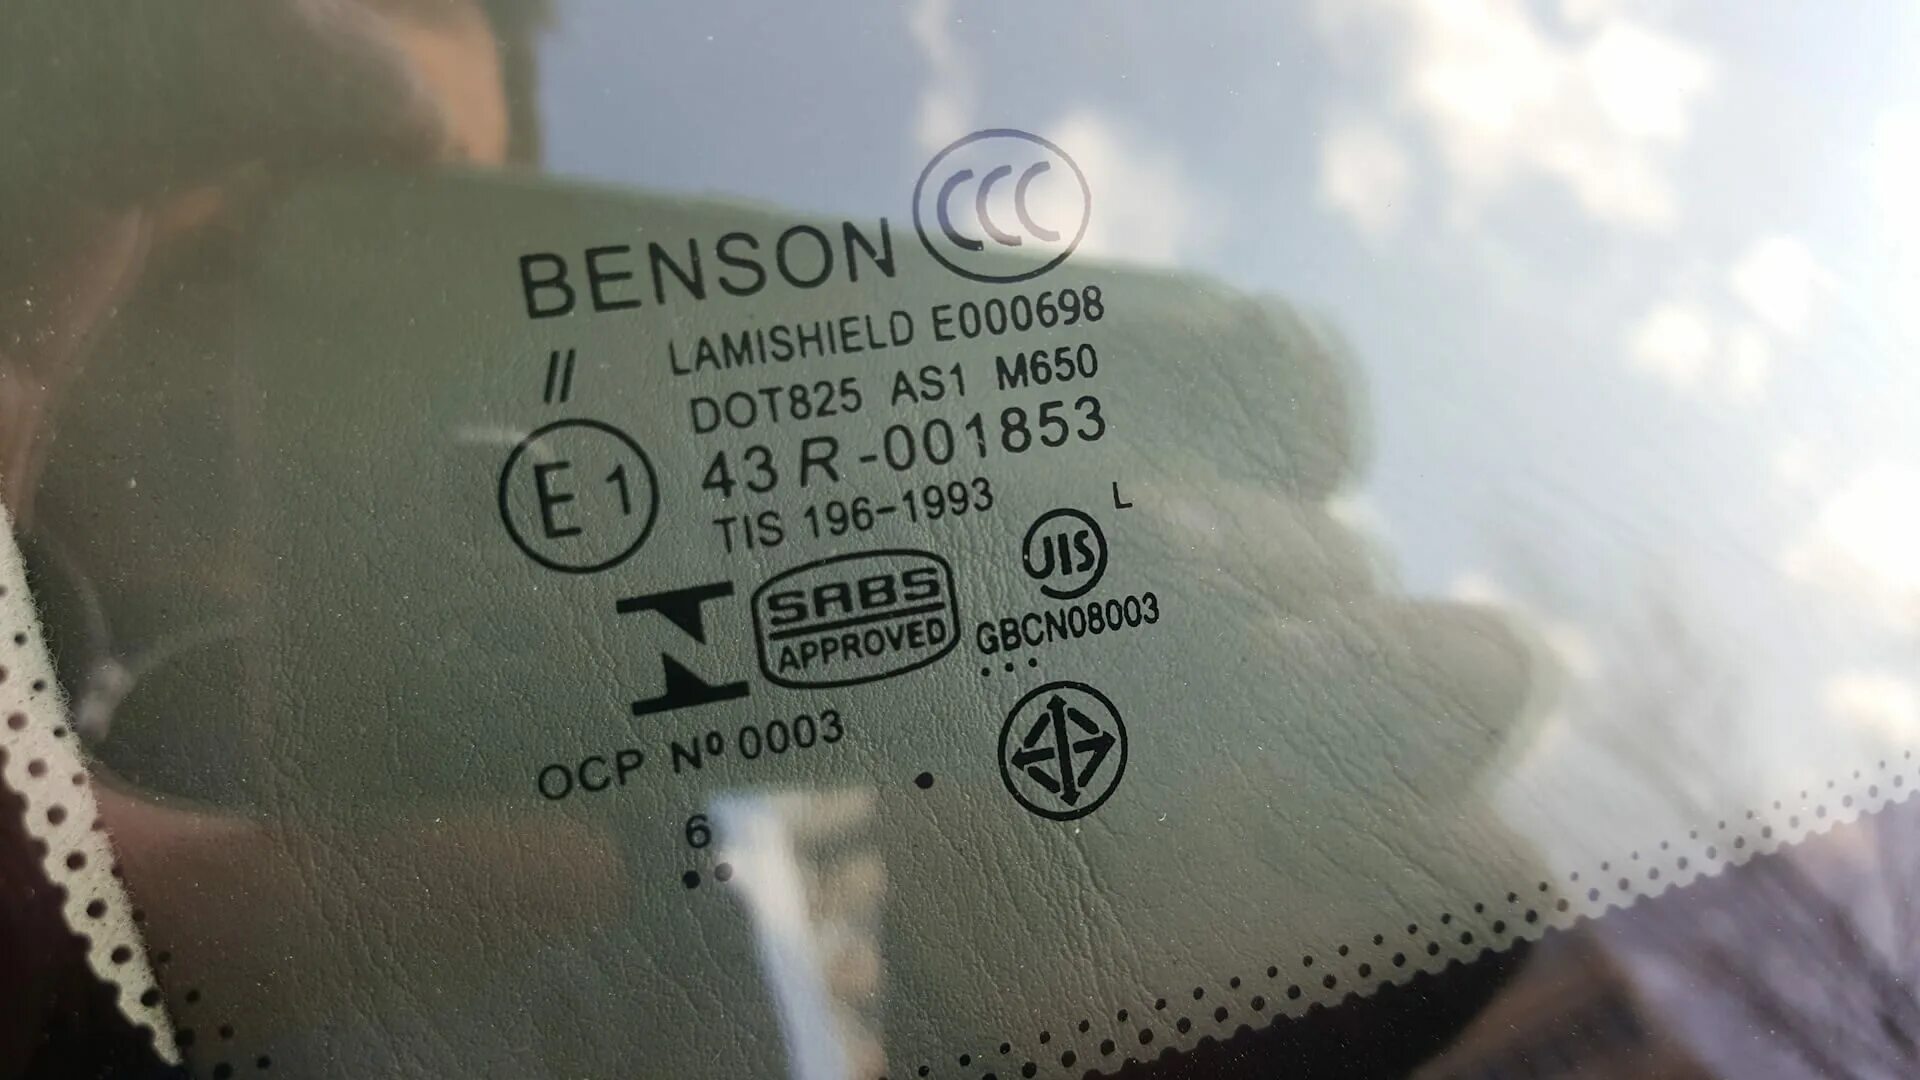 Benson лобовое стекло 08003. Лобовое стекло Benson маркировка. XYG gs12lcpshlfwhx. Маркировка на лобовом стекле. Xyg стекло производитель